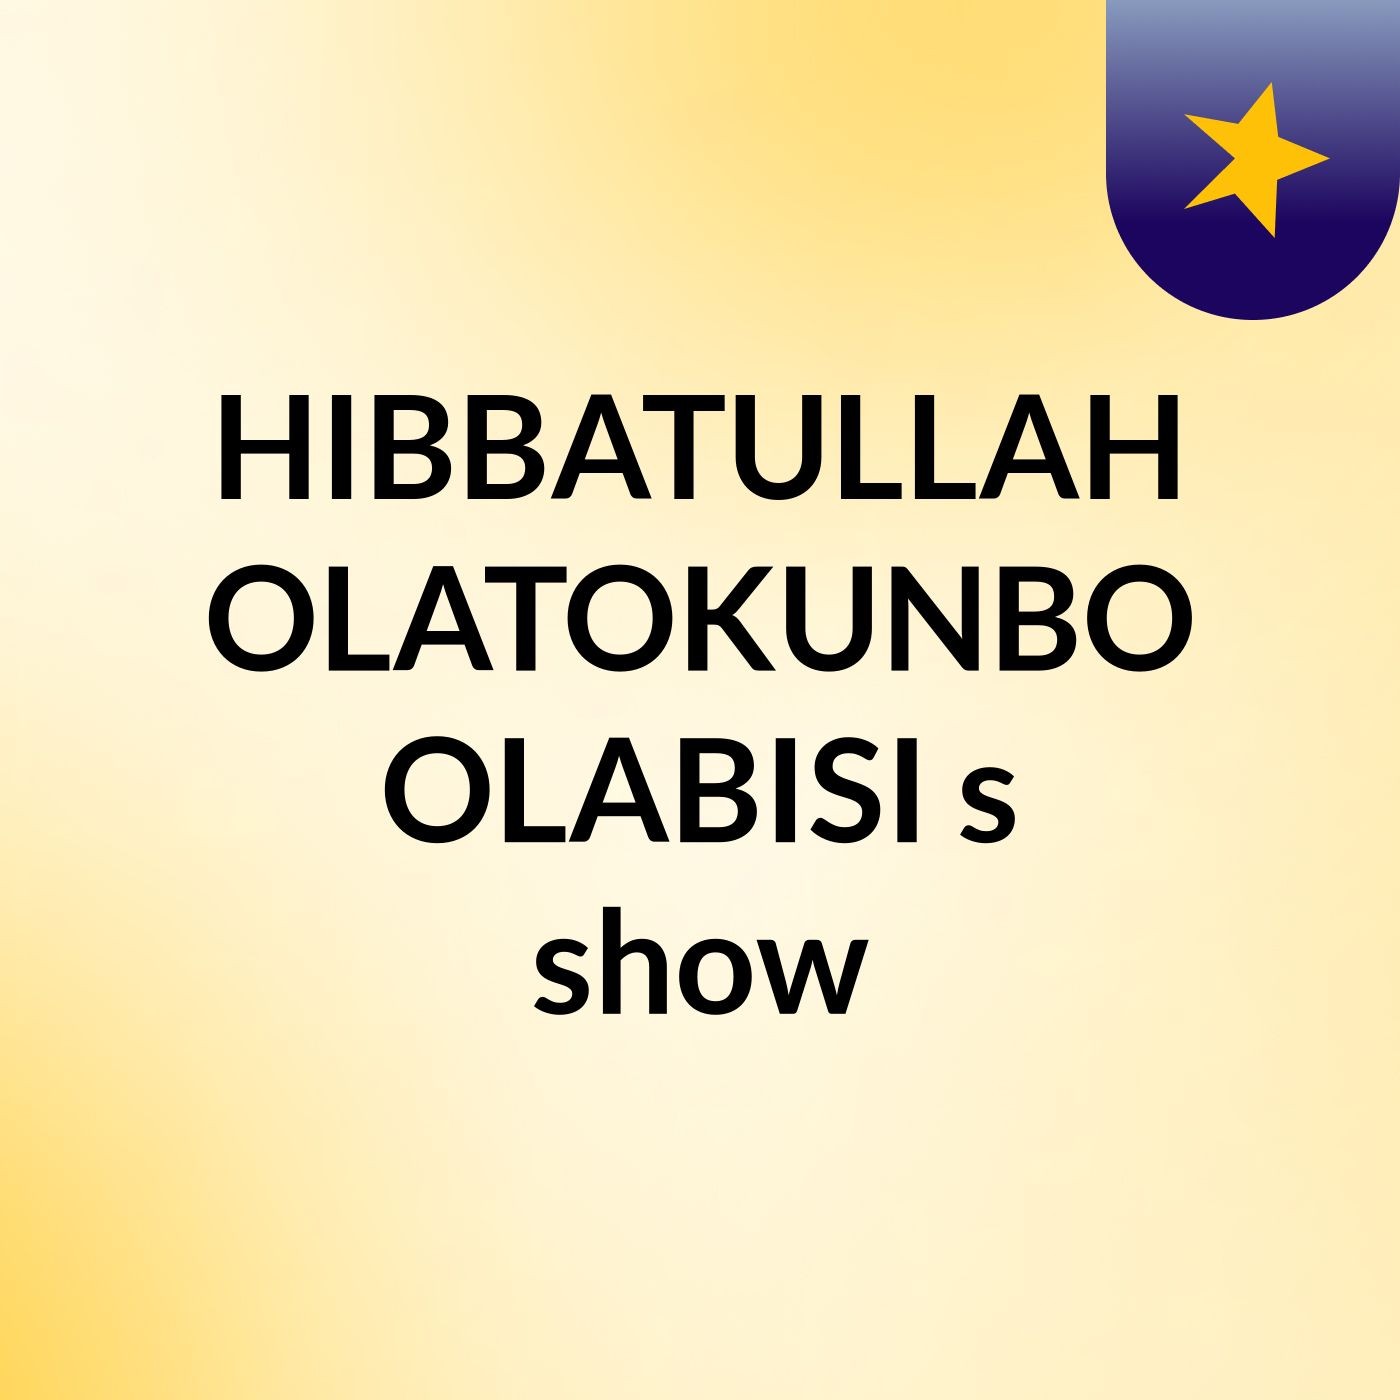 HIBBATULLAH OLATOKUNBO OLABISI's show